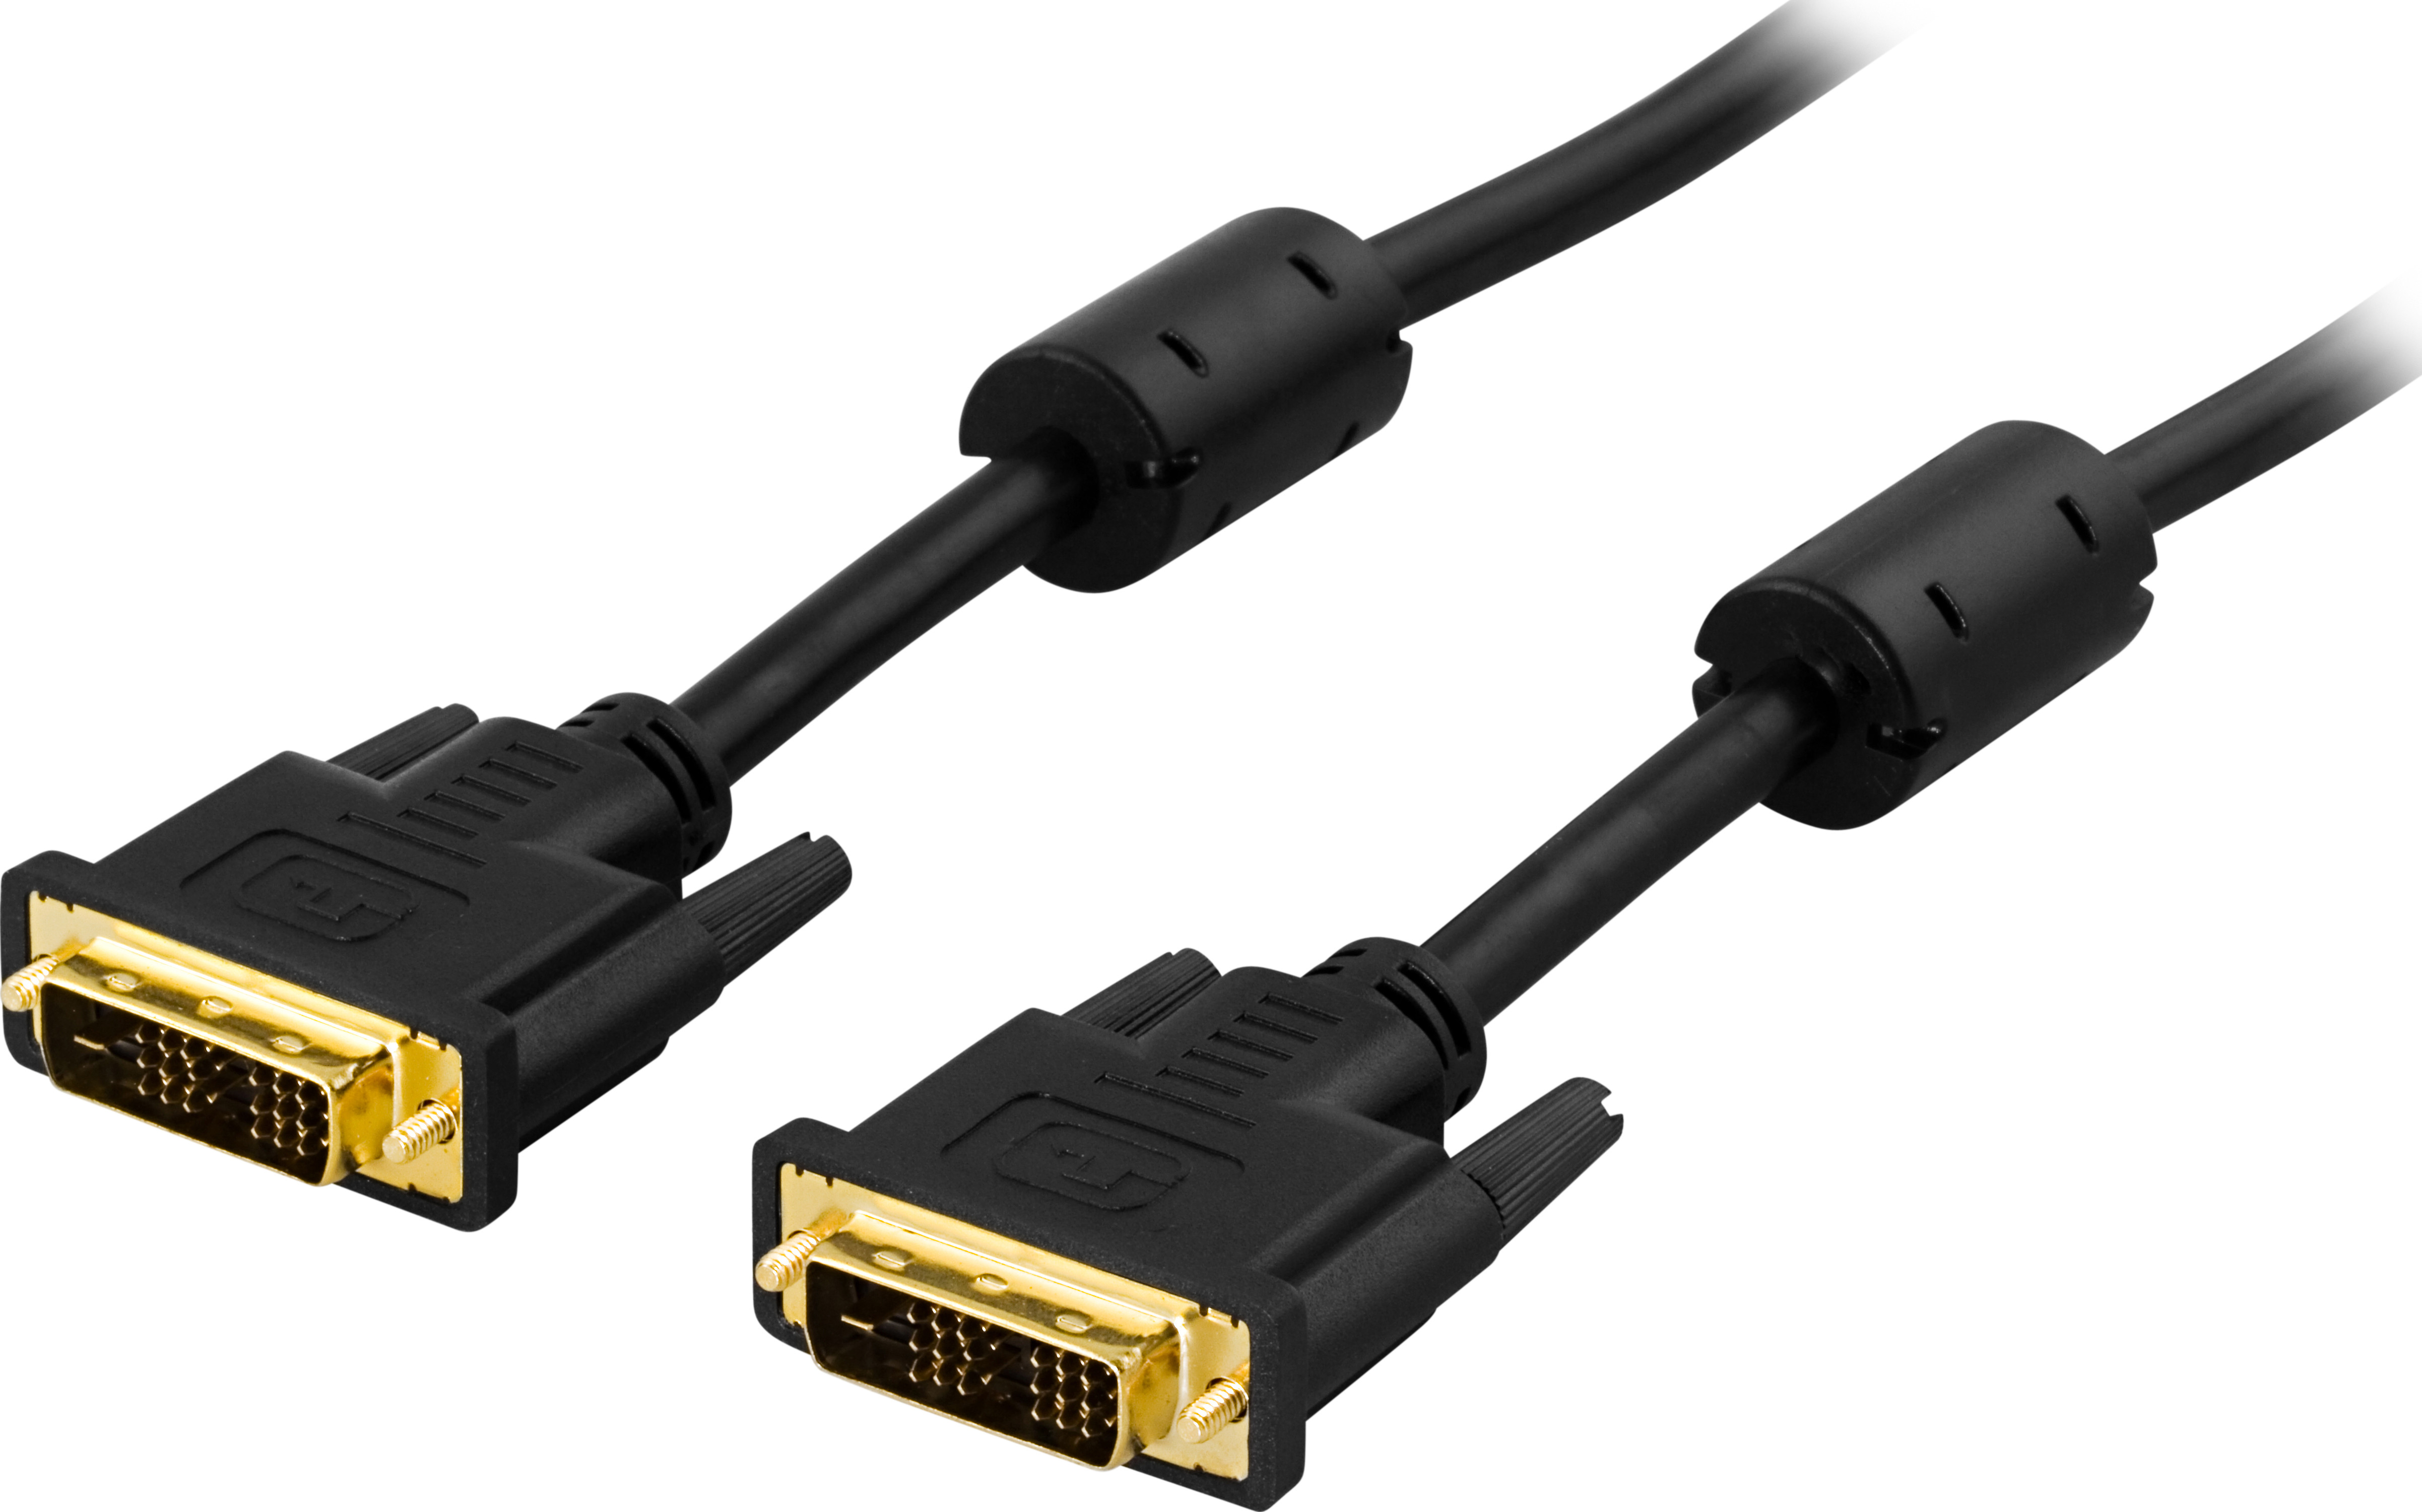 DVI Single Link monitor cable DELTACO DVI-D 18 + 1-pin ha-ha, gold-plated connectors, conductor of pure copper, 3m, black / VE011-B